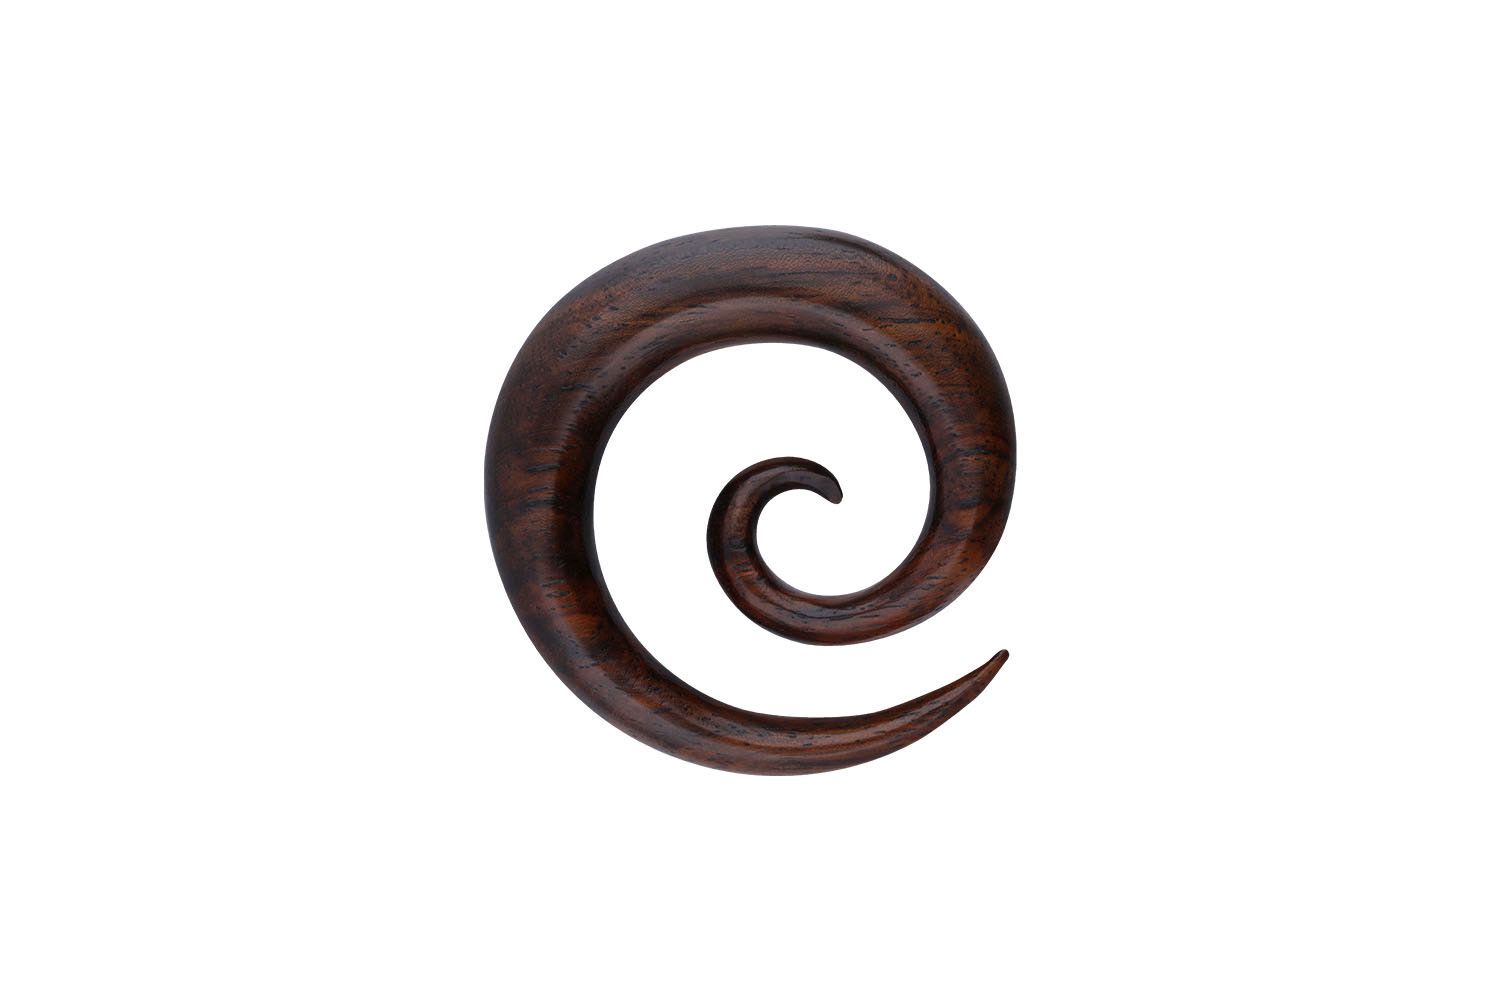 Wood spiral expander - sono ++SALE++